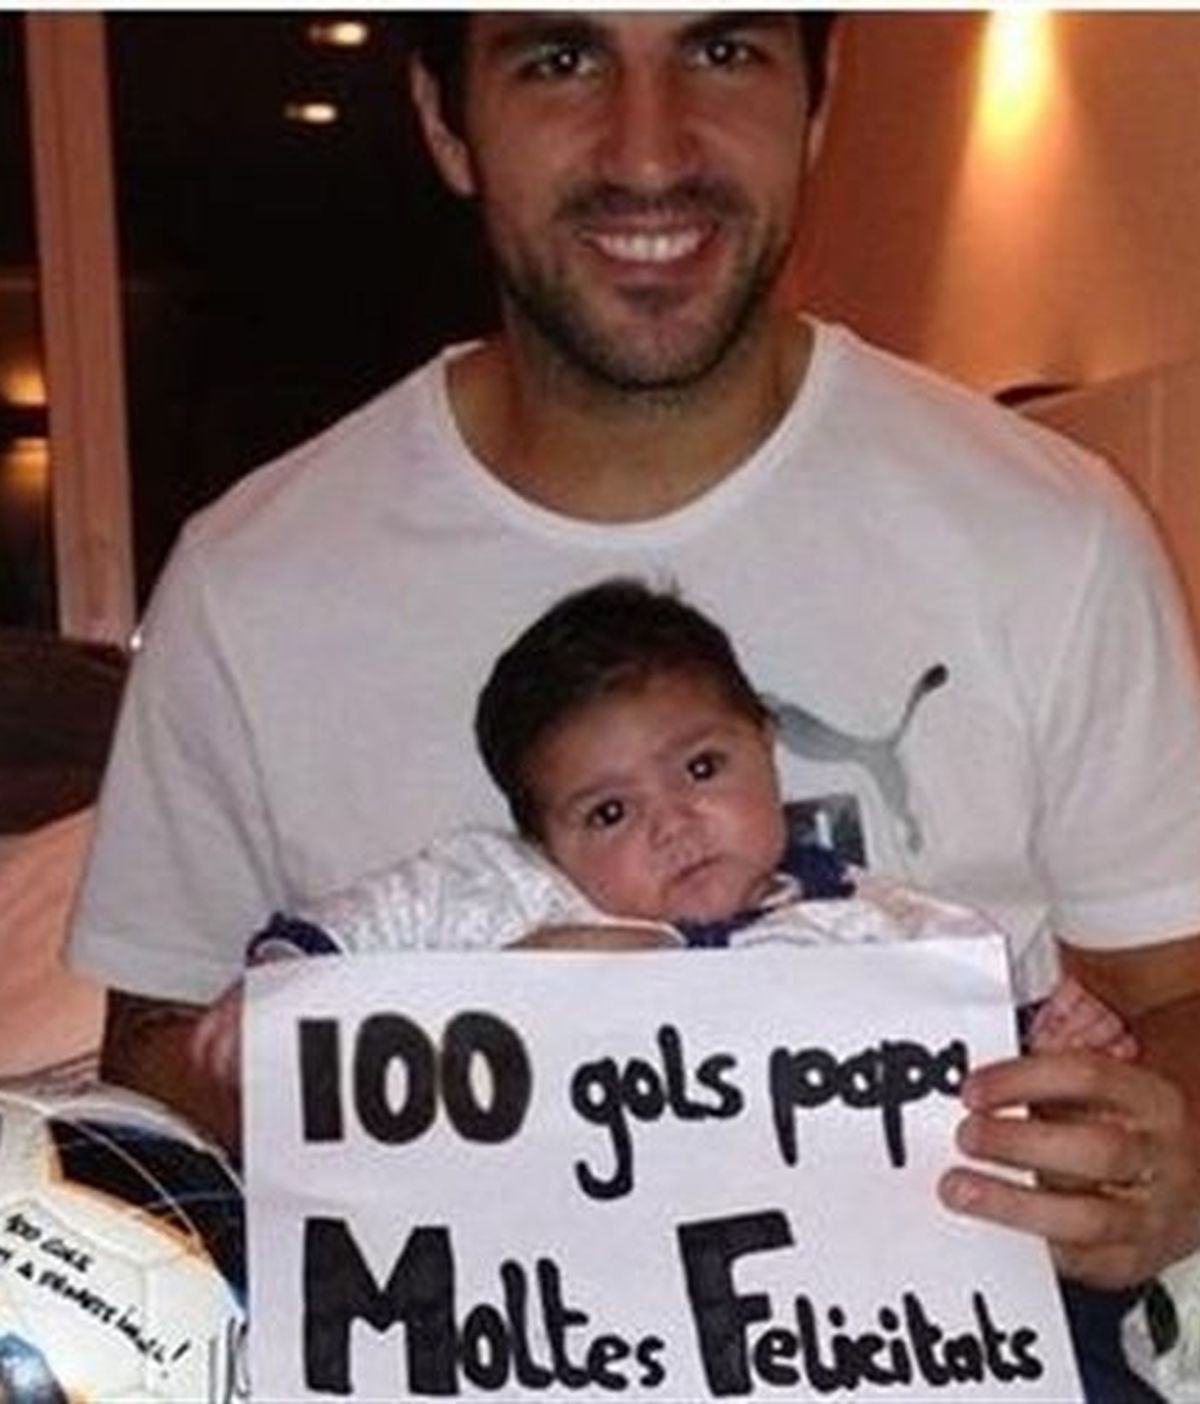 La hija de Cesc Fàbregas felicita a su padre por sus 100 goles